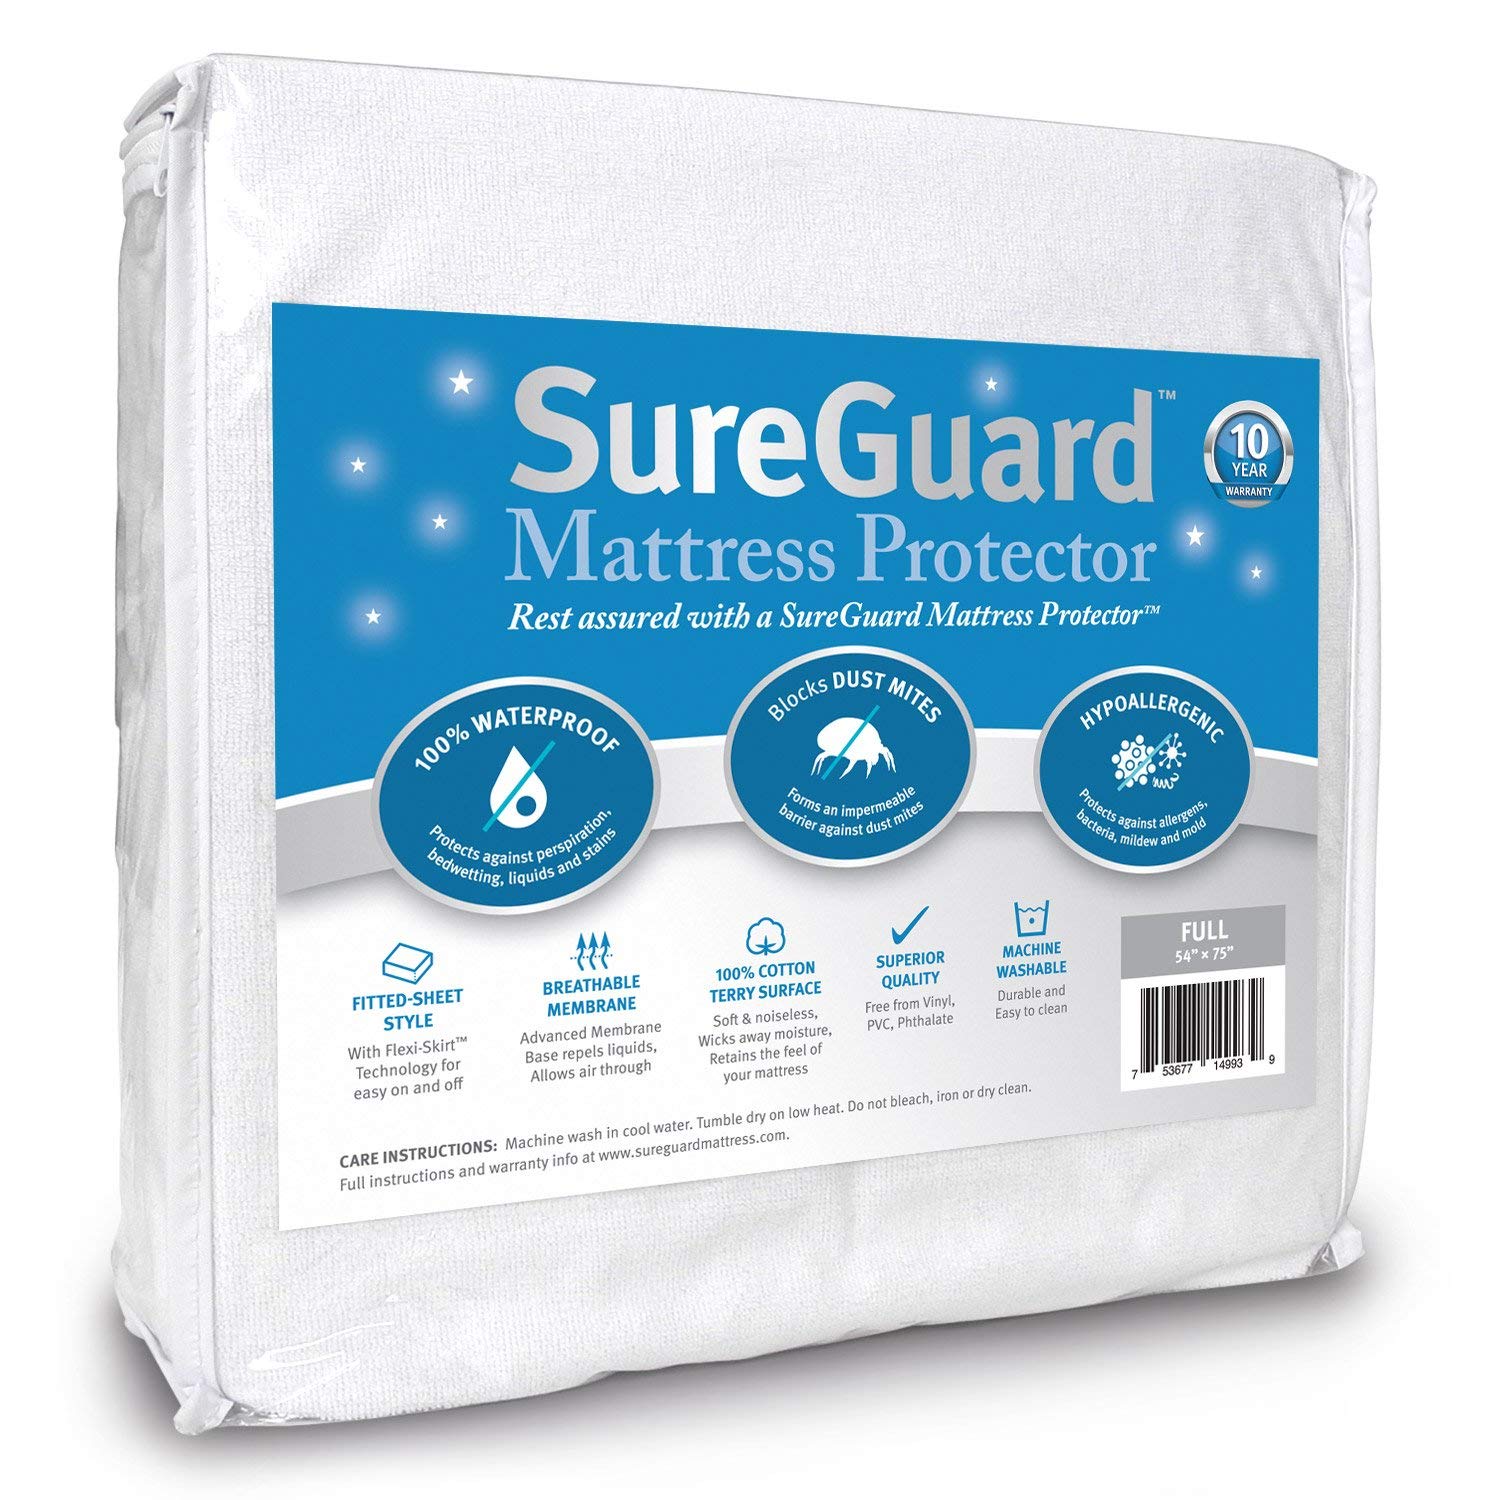 SureGuard Mattress Protector